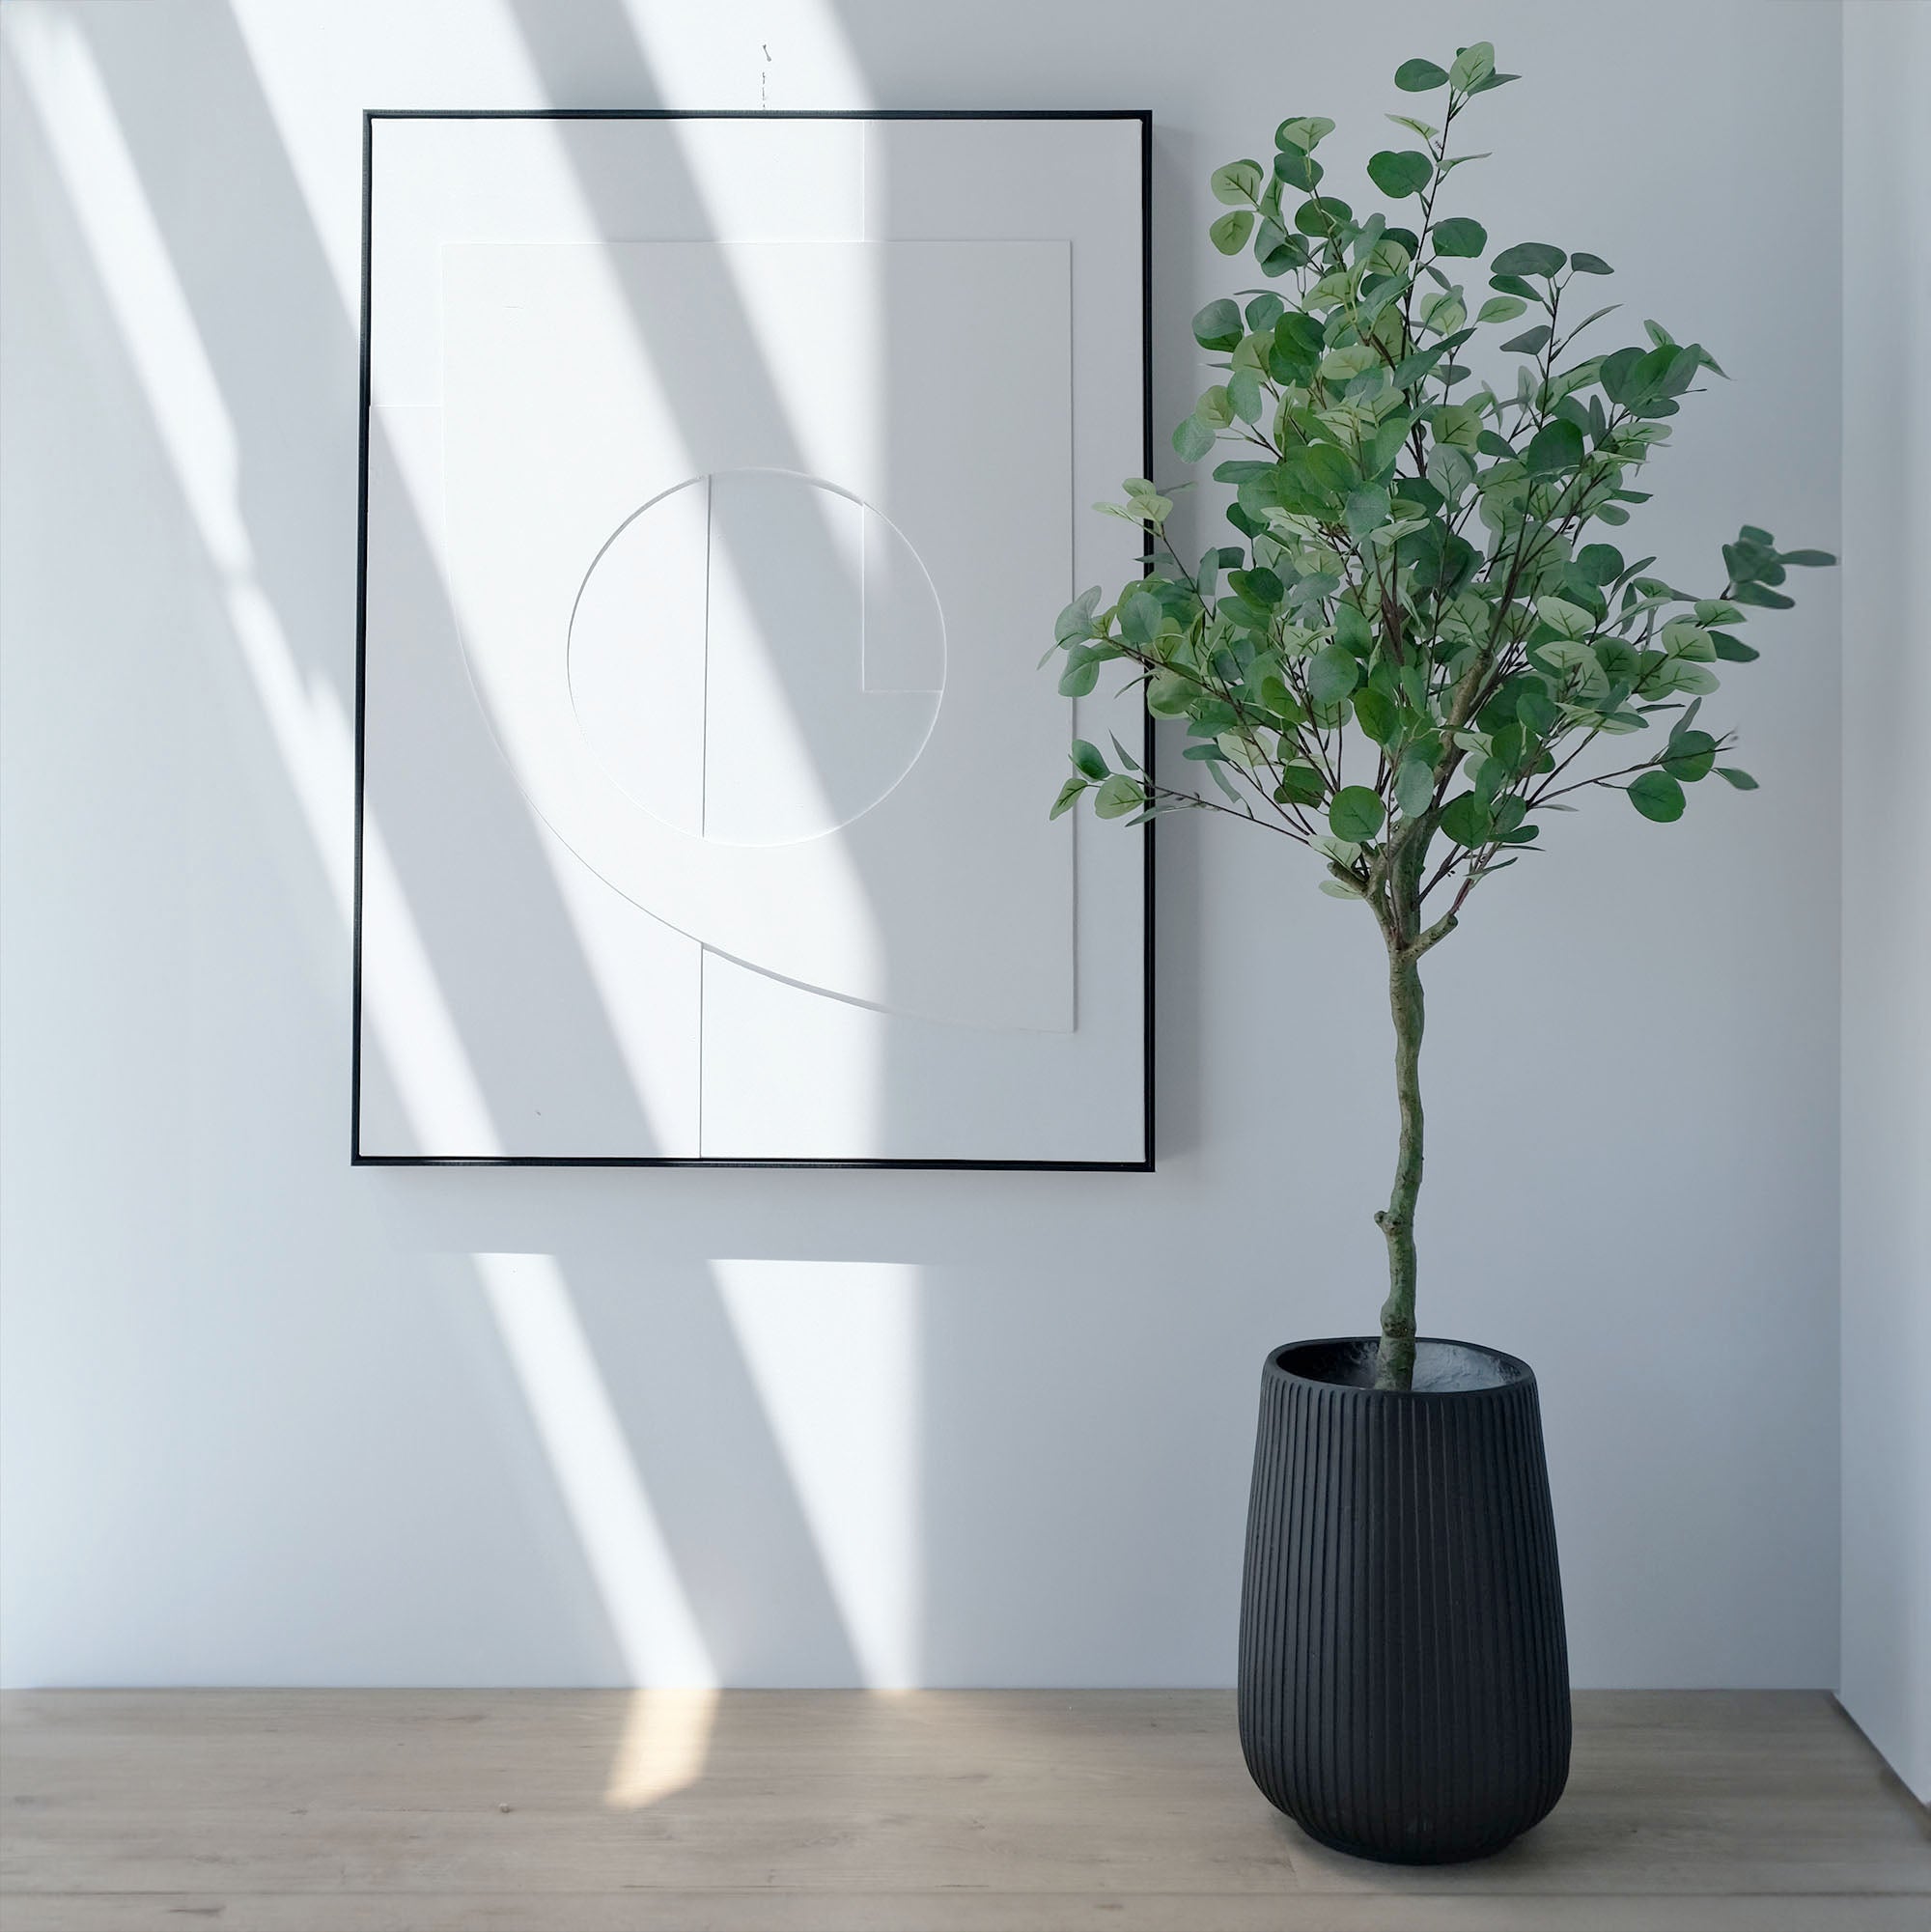 Faux-eucalyptus  plant in a black planter next to art